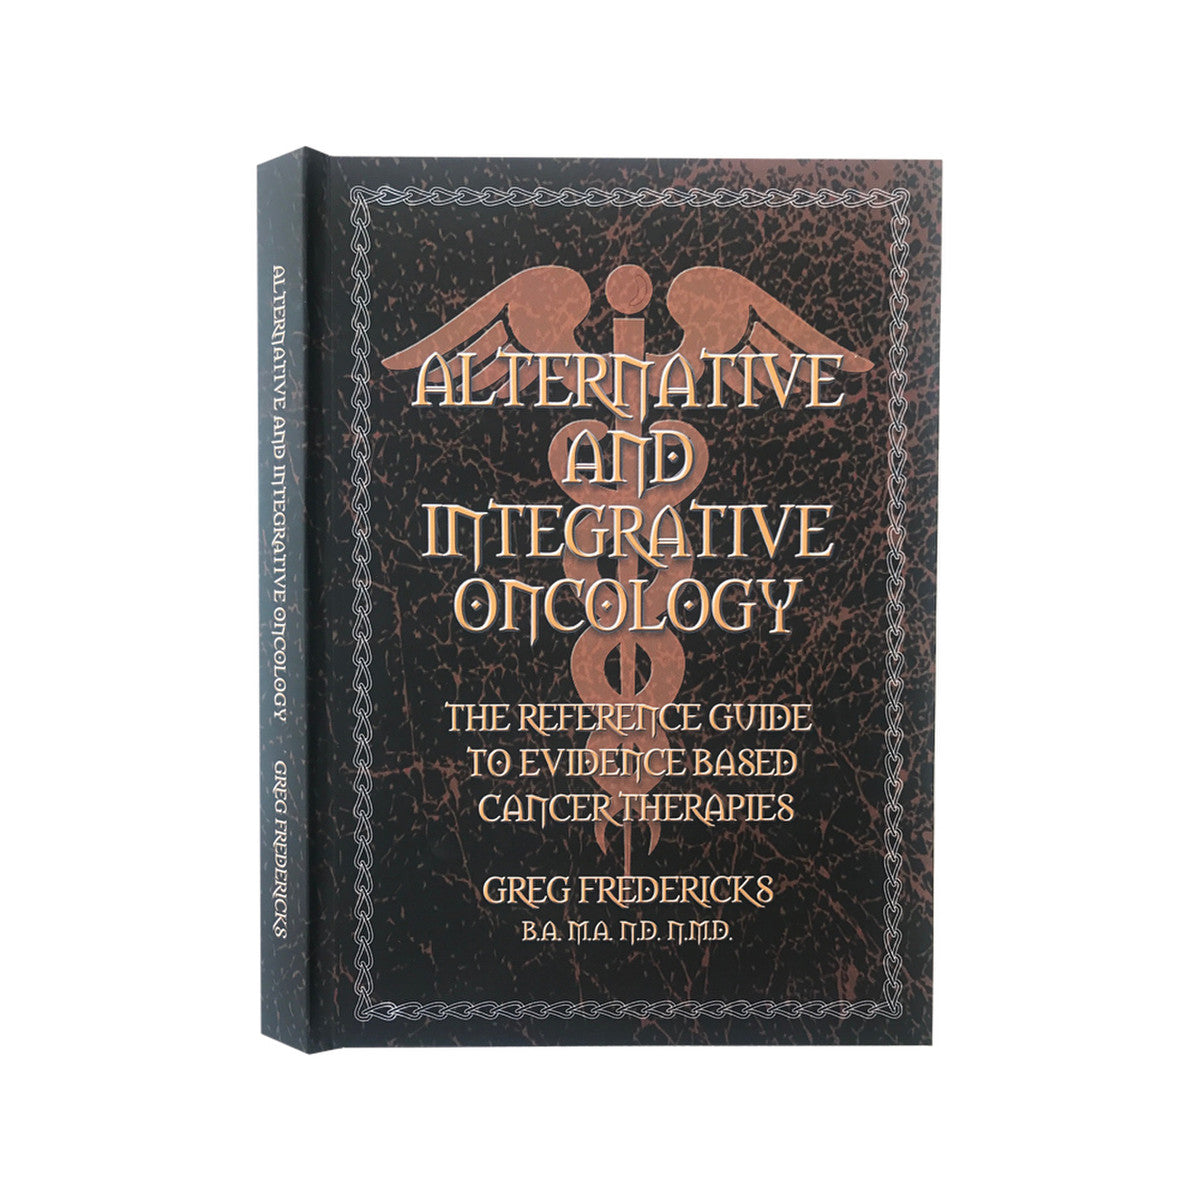 Alternative and Integrative Oncology by Greg Fredericks